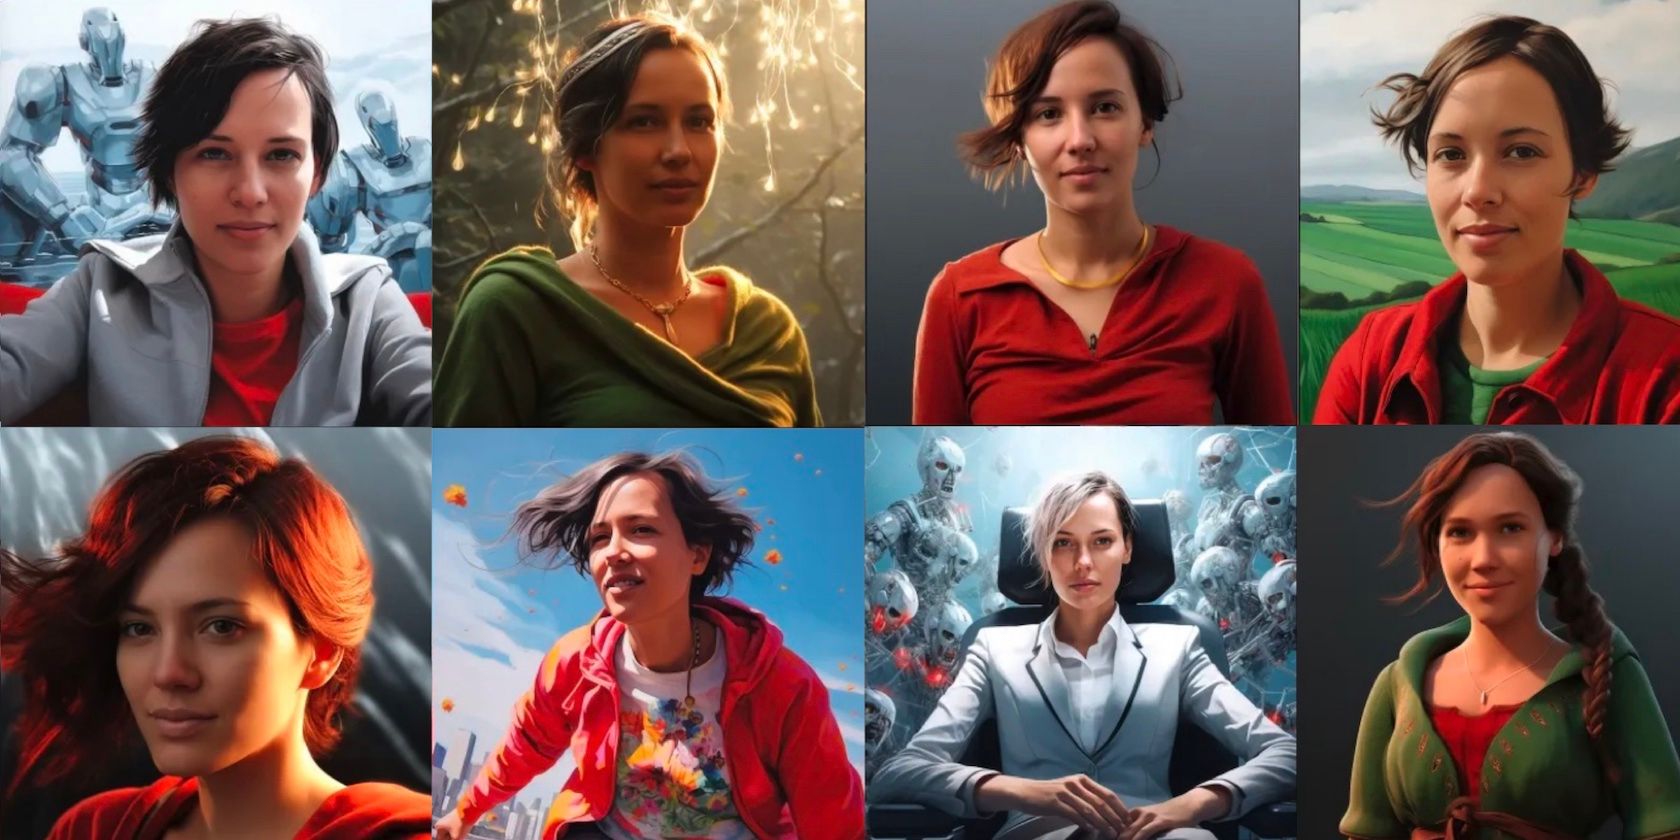 How to Create Beautiful AI Self-Portraits With Midjourney